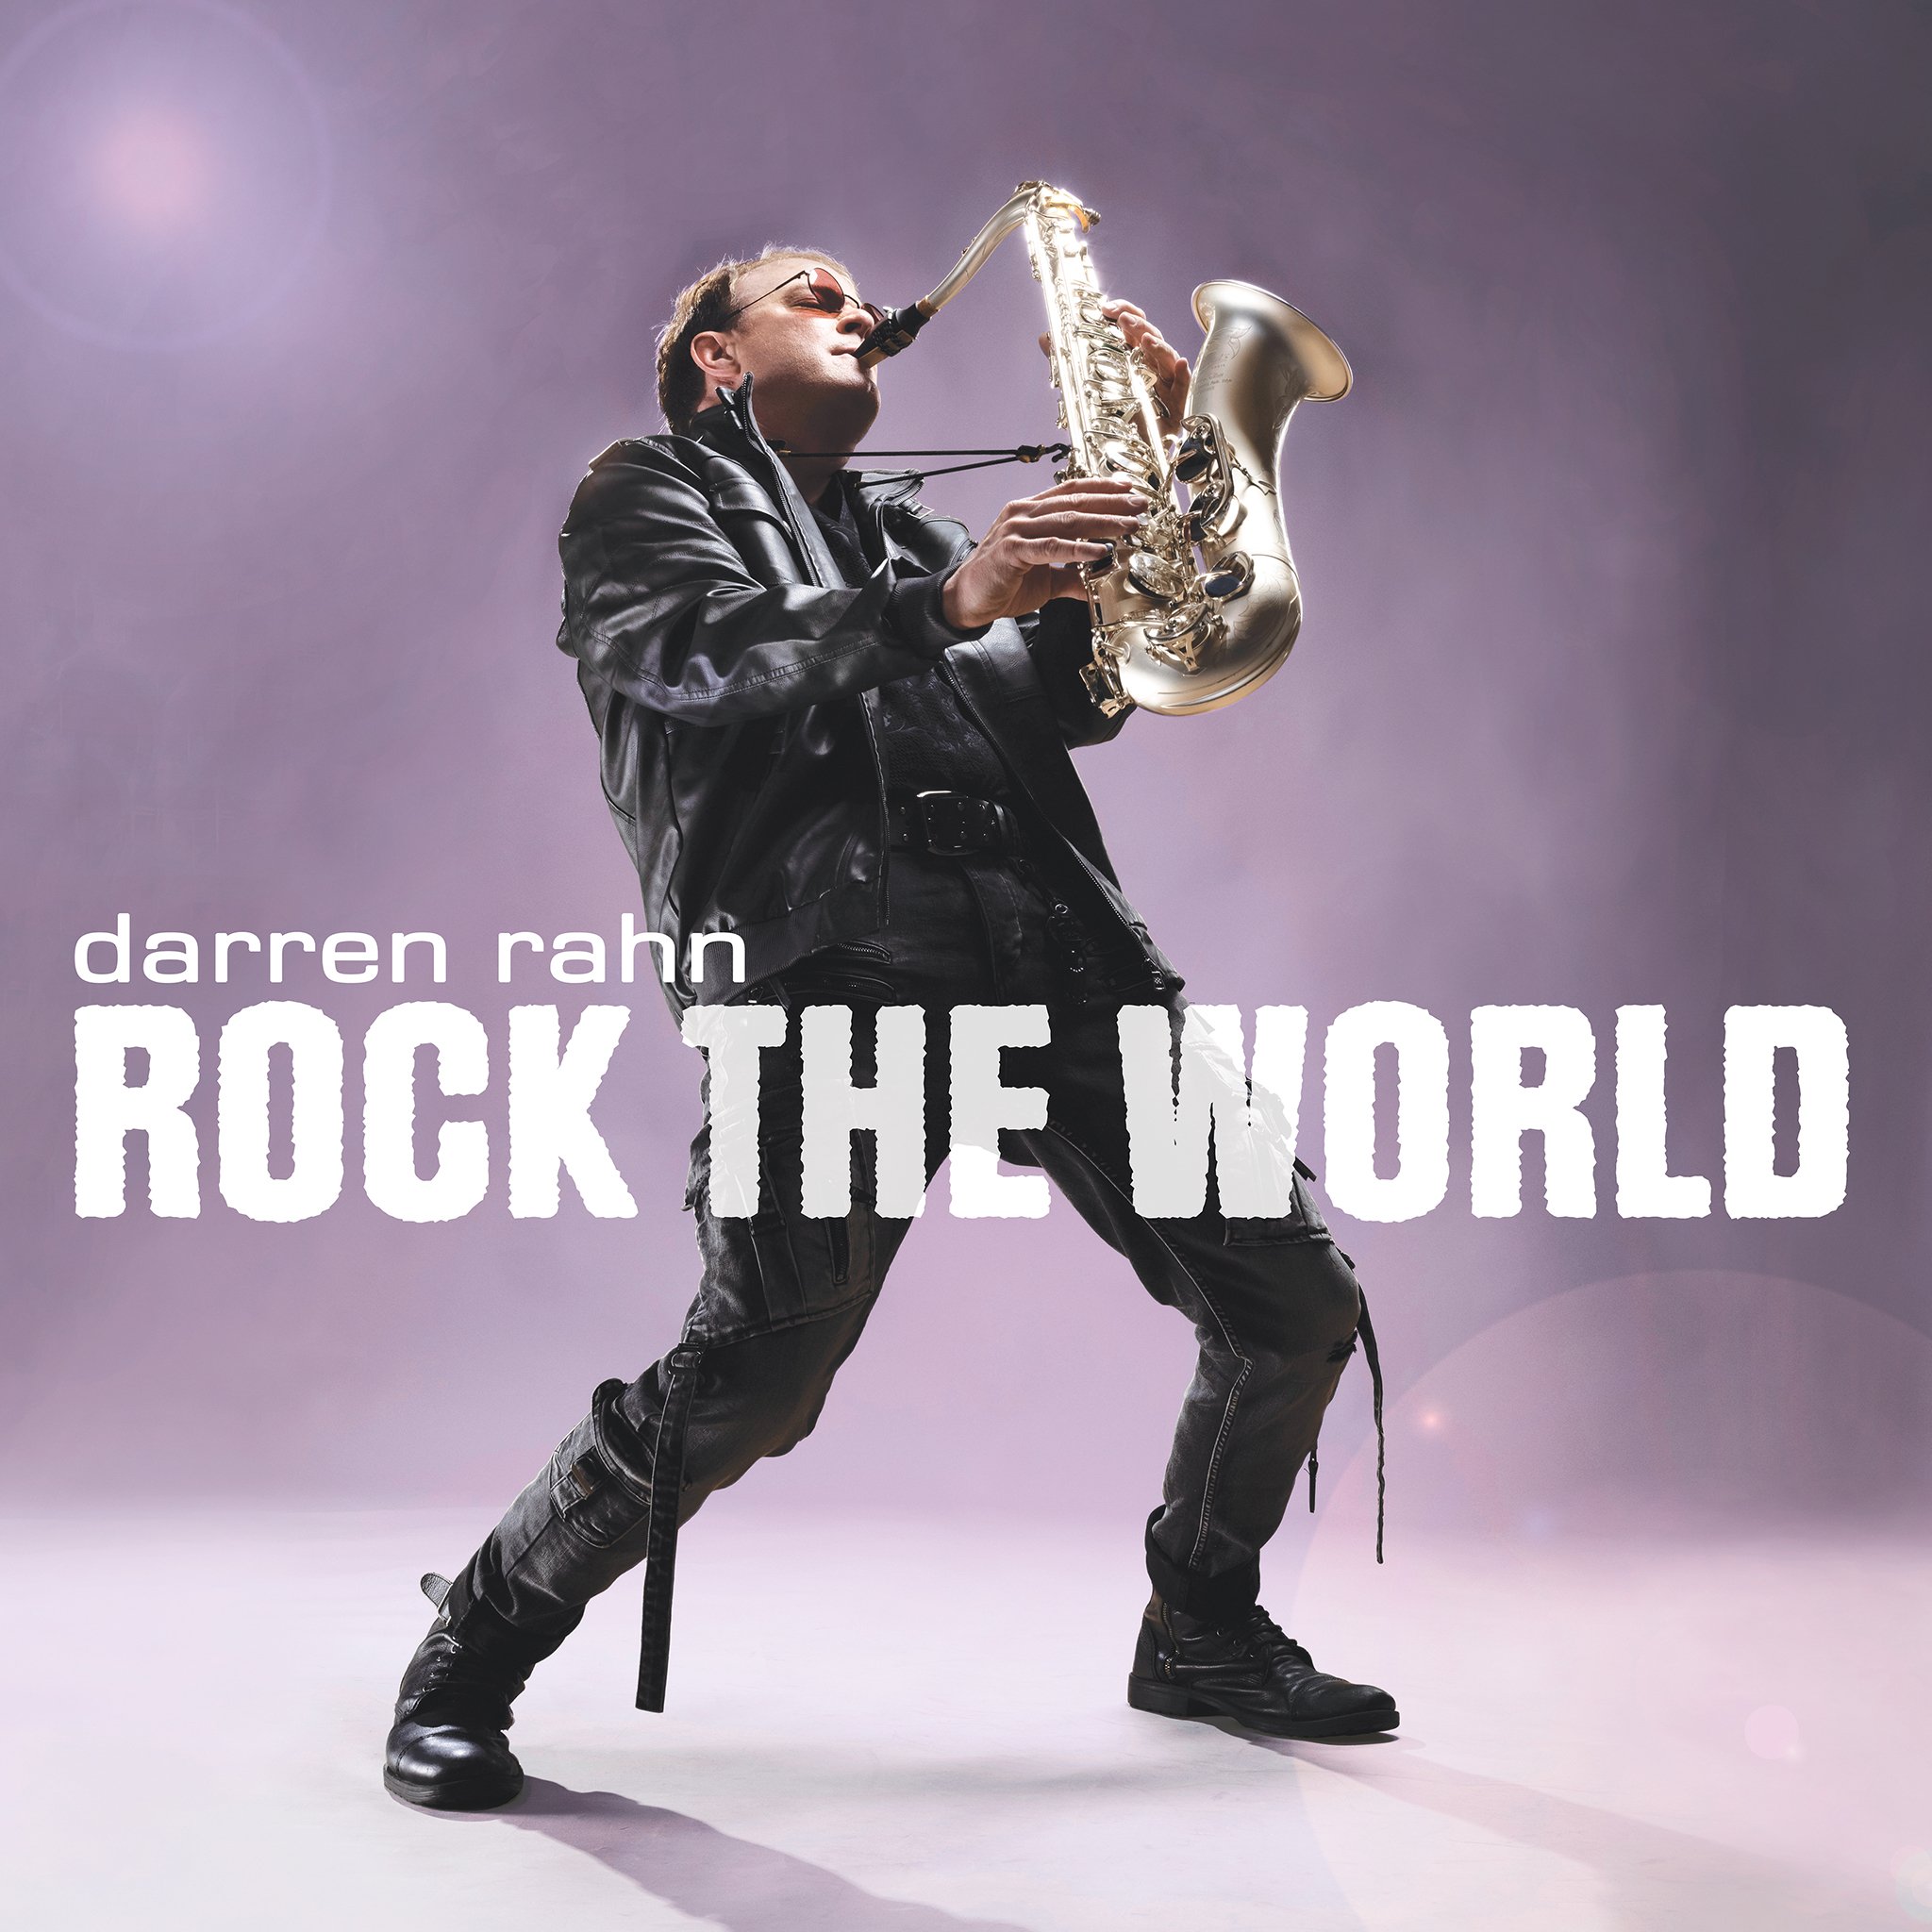 Darren Rahn "Rock the World" Album